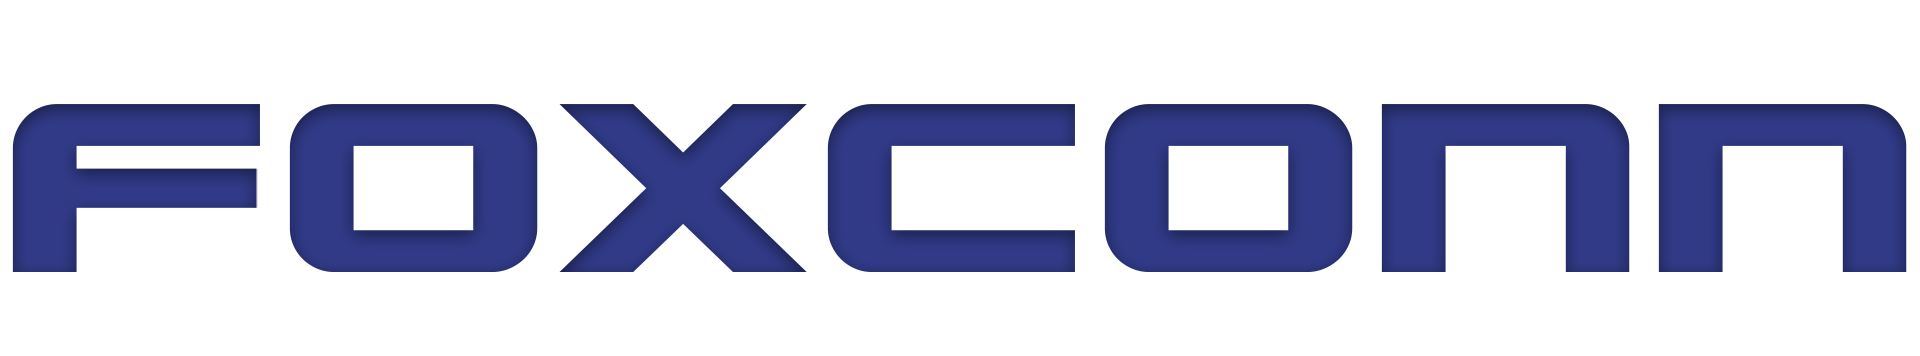 Logo do grupo Foxconn